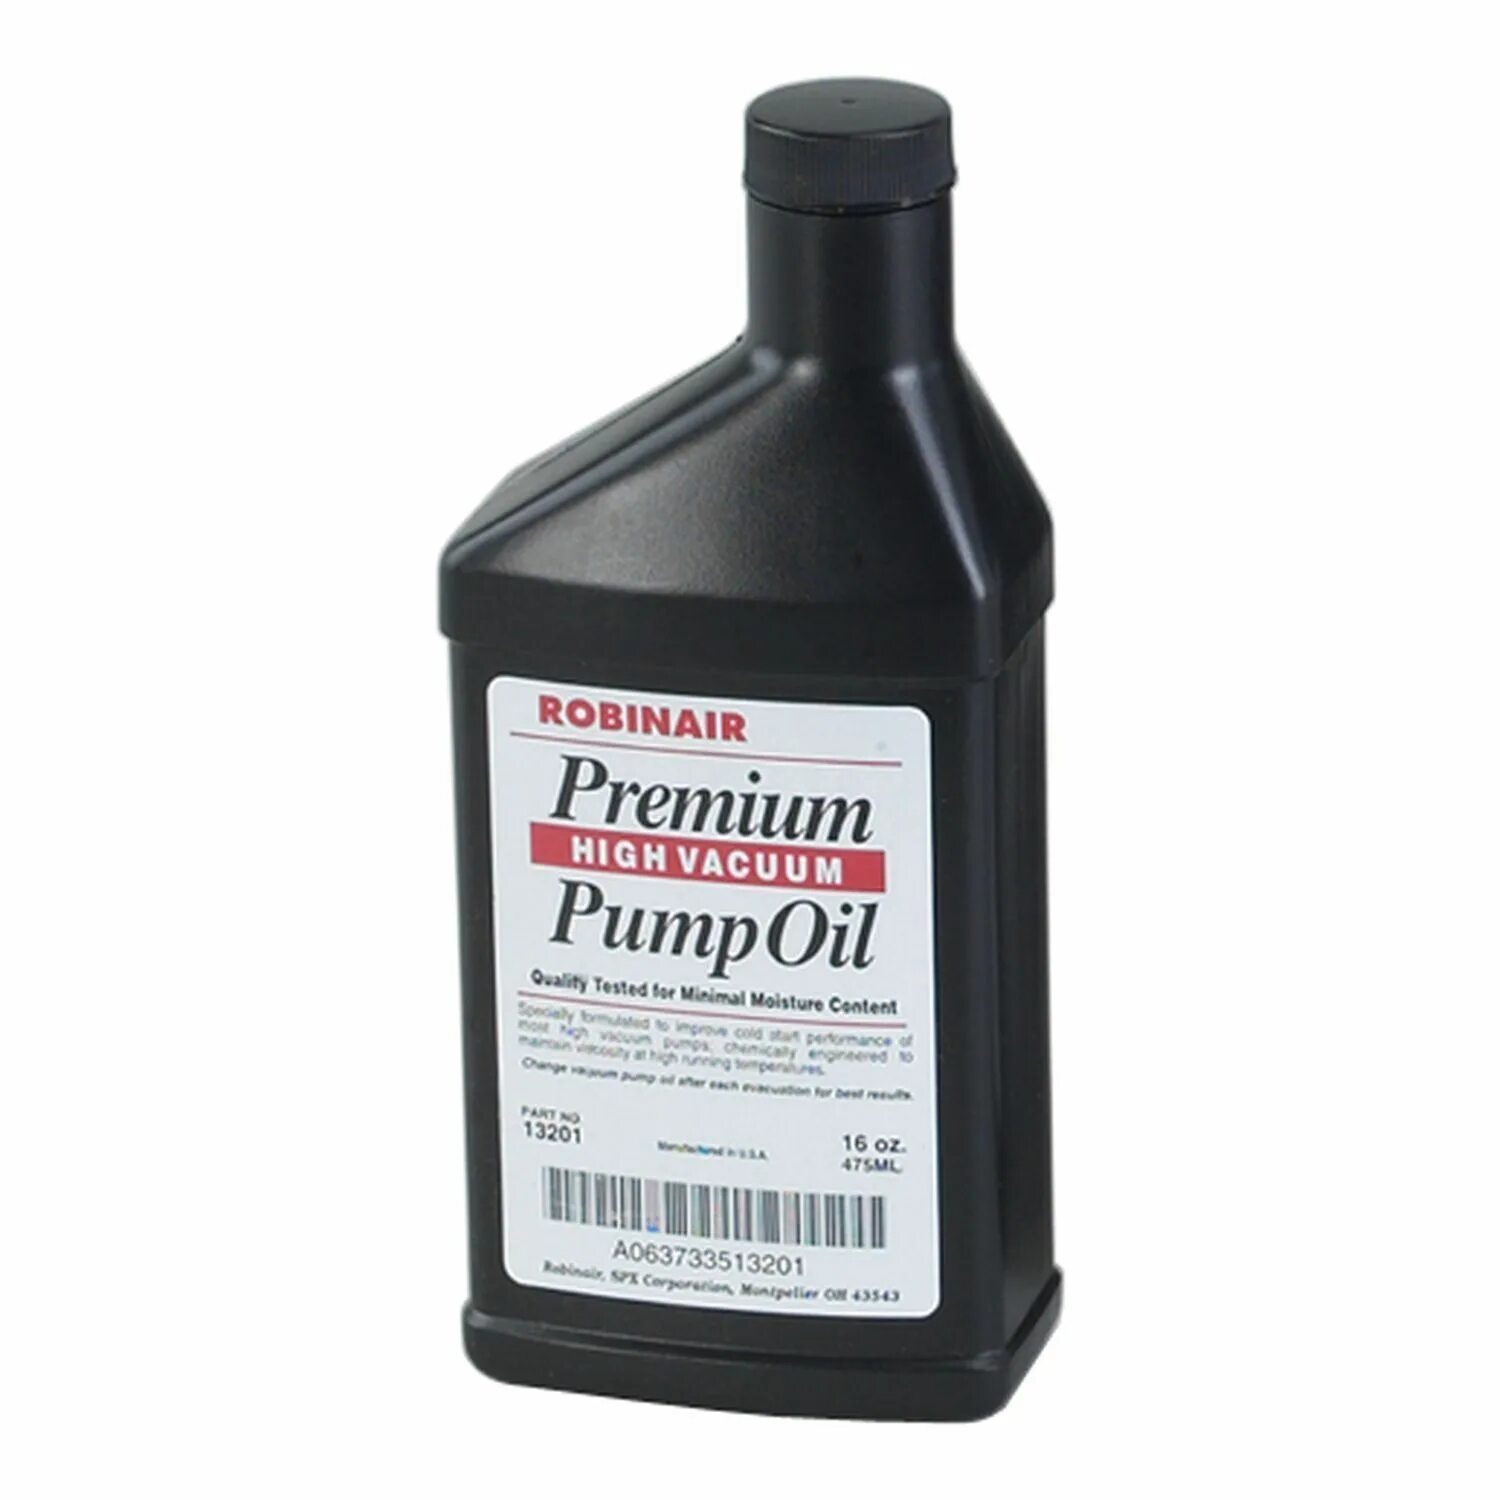 Масло Premium Vacuum Pump Oil. Вакуумный насос Robinair. High Vacuum Pump Oil масло для вакуумного насоса. Robinair 15301 вакуумный насос.